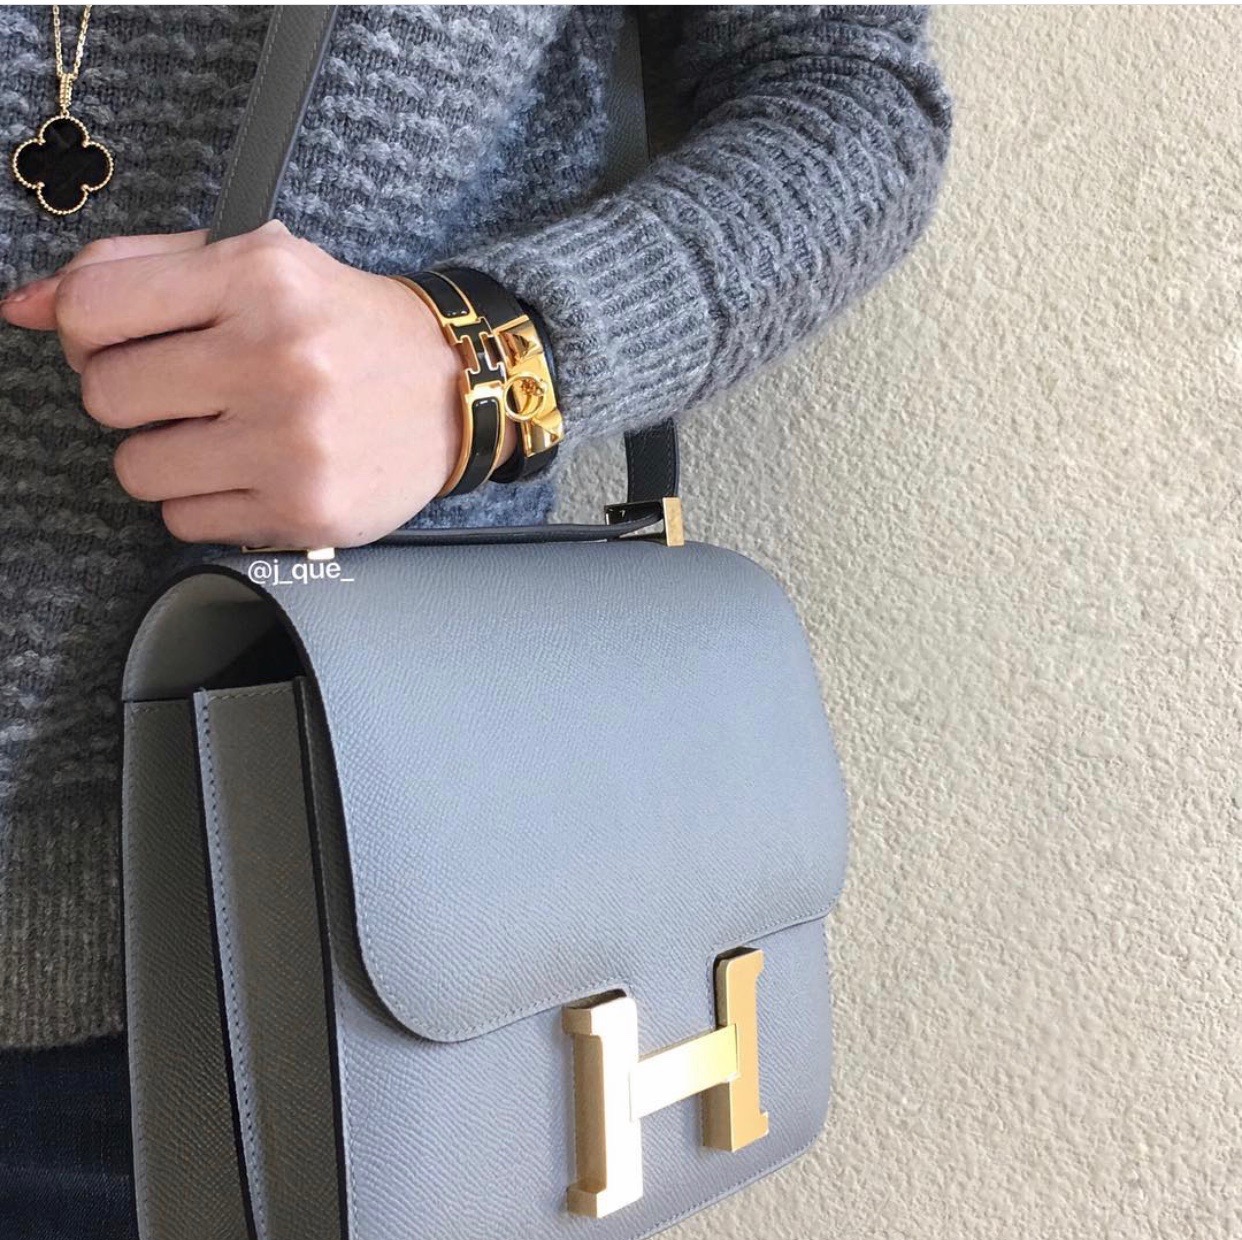 Vote: What's Your Favorite Hermès Gray? - PurseBop